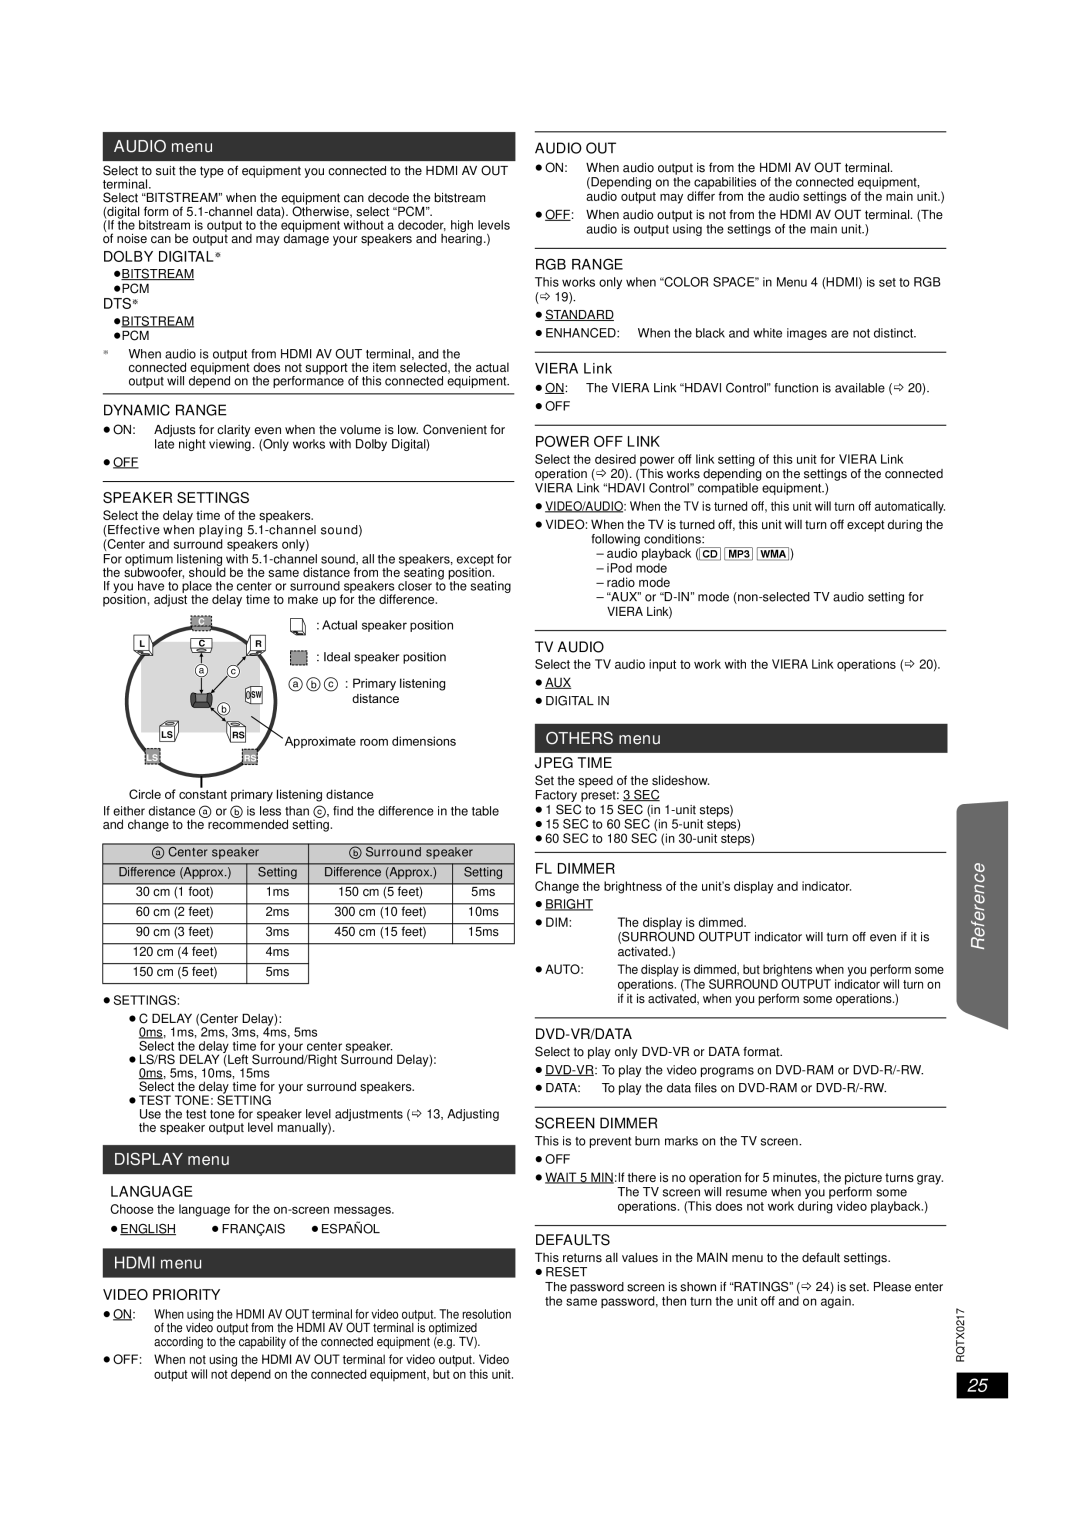 Panasonic SC-PT464 manual AUDIO menu, DISPLAY menu, HDMI menu, OTHERS menu 